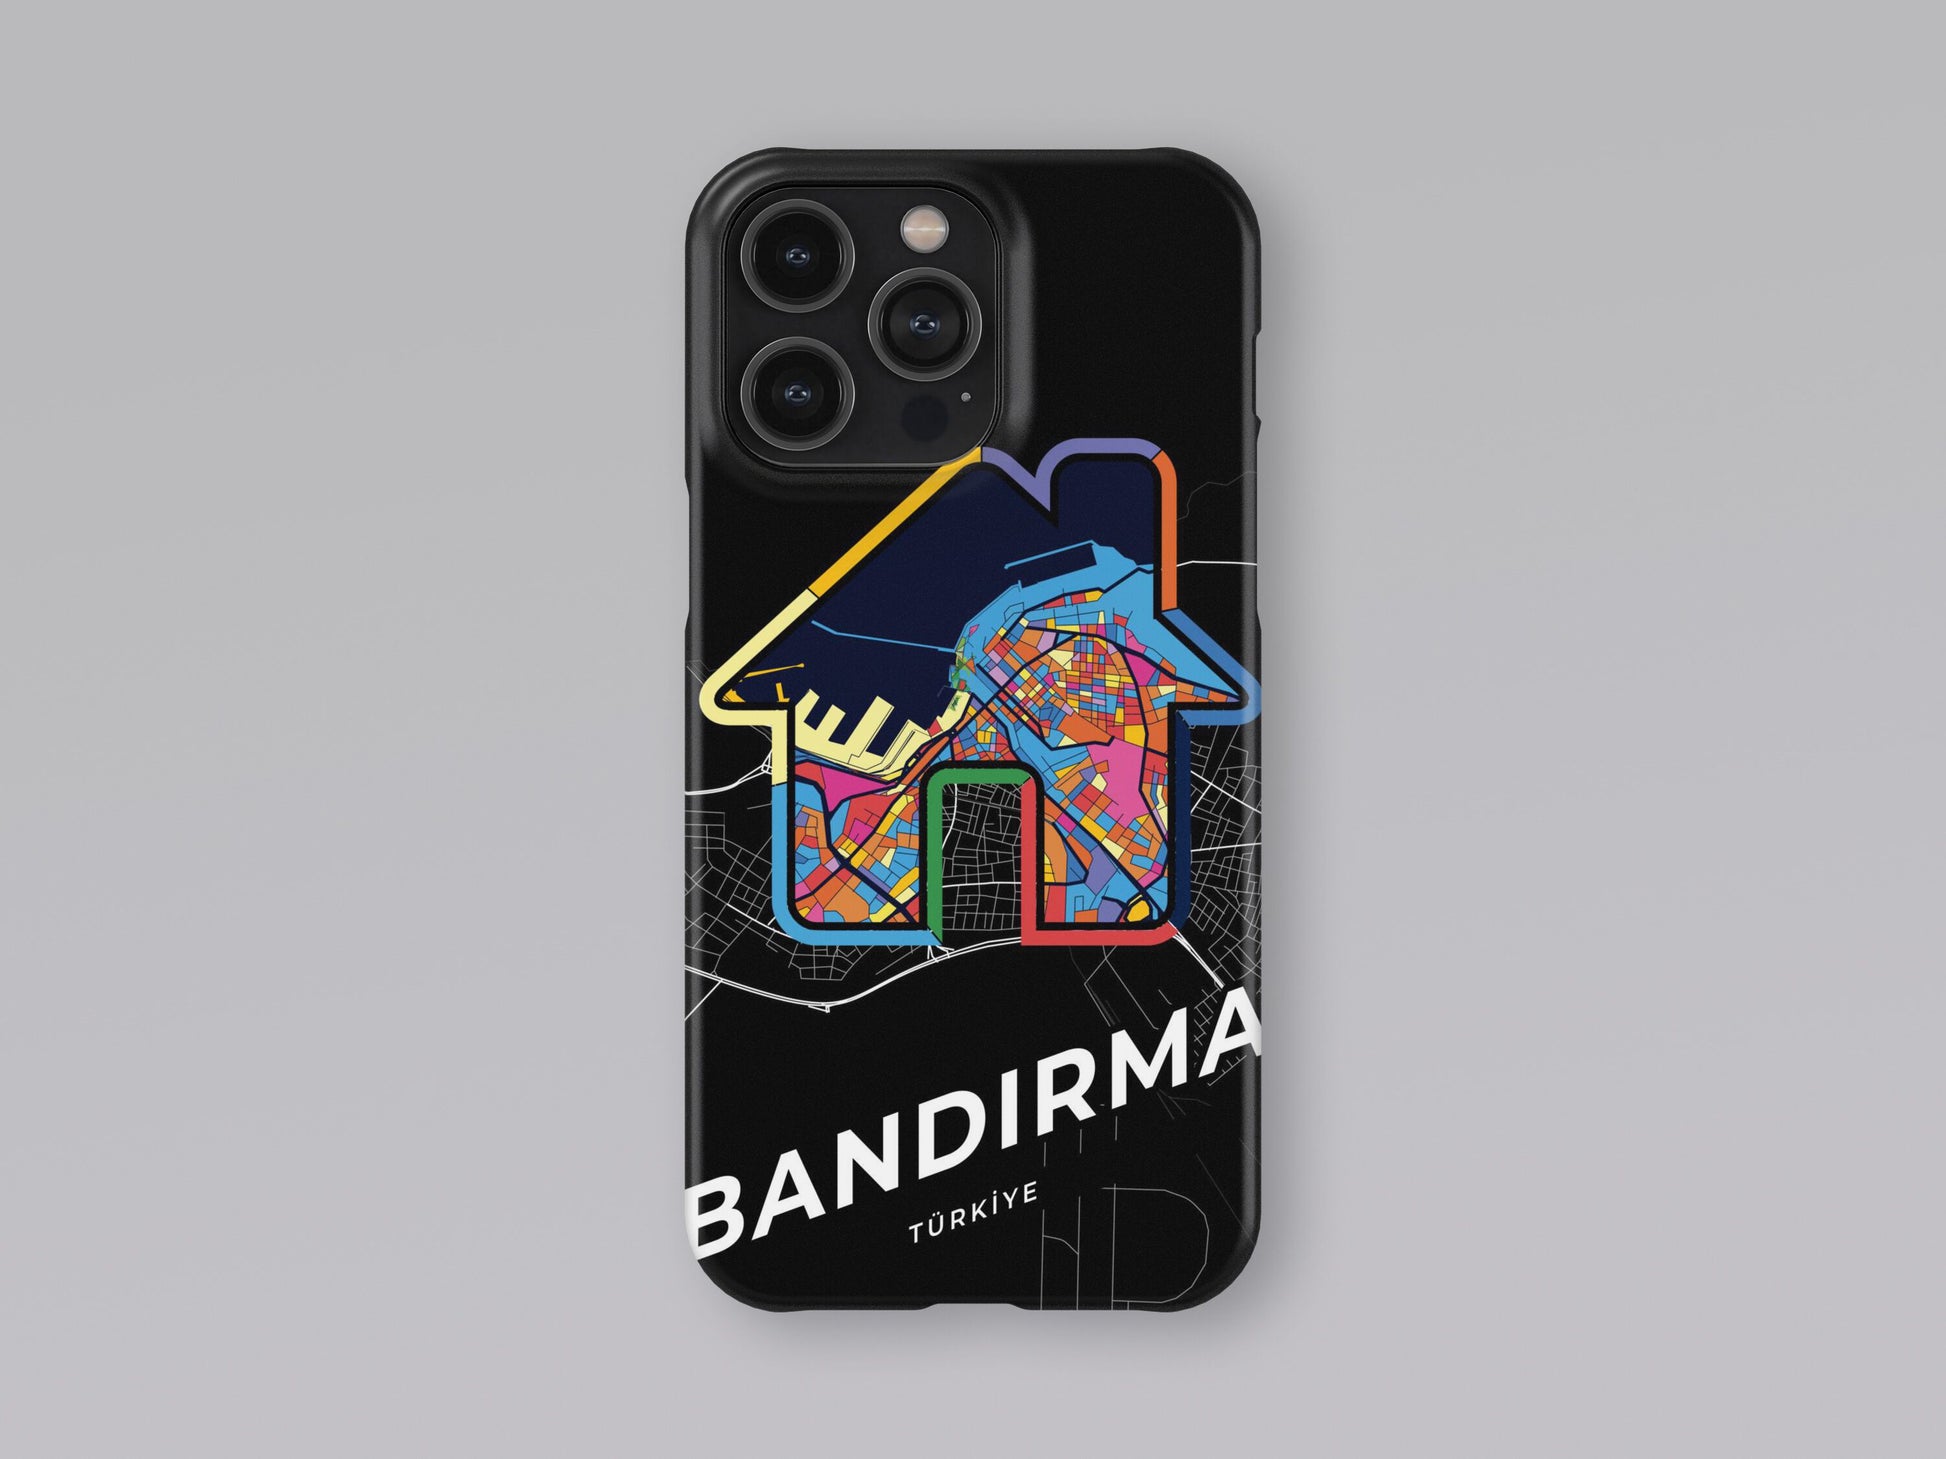 Bandırma Turkey slim phone case with colorful icon. Birthday, wedding or housewarming gift. Couple match cases. 3